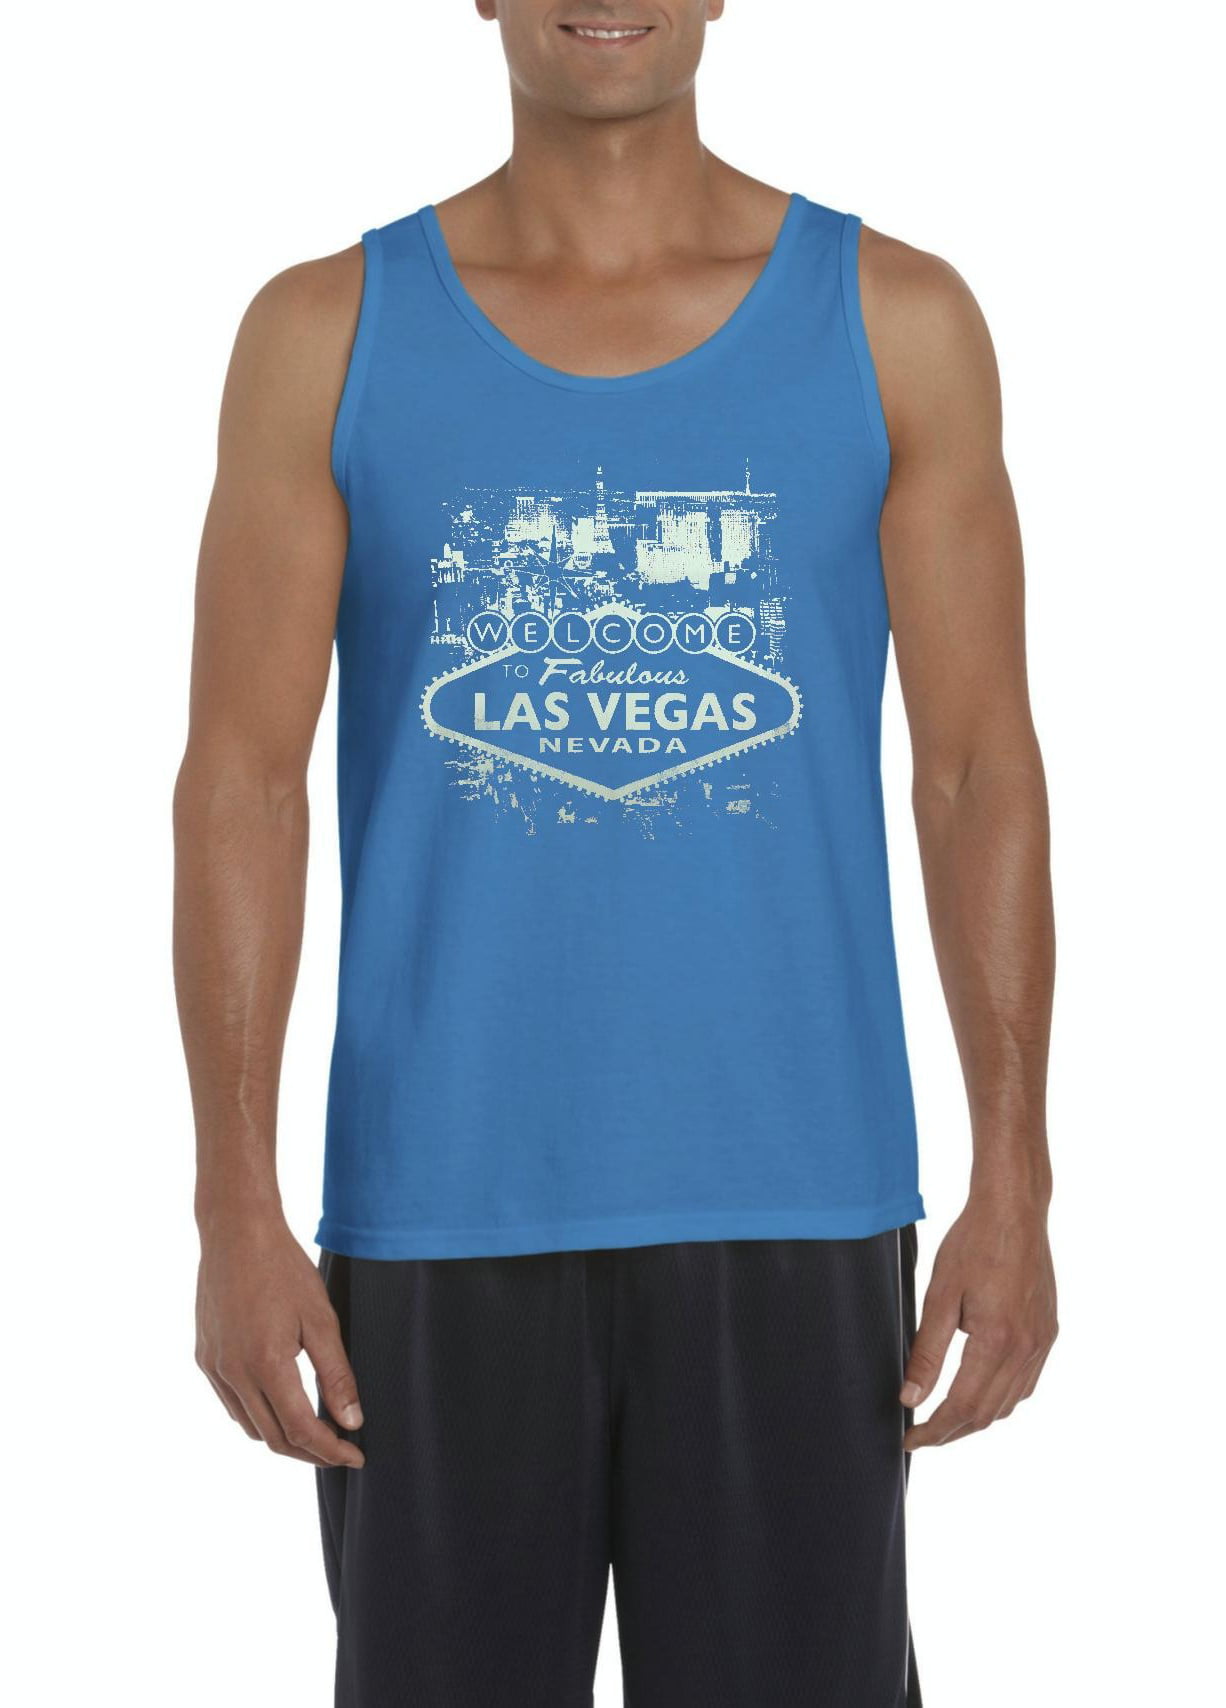 Artix - Mens Welcome to Las Vegas Nevada Tank Top - Walmart.com ...